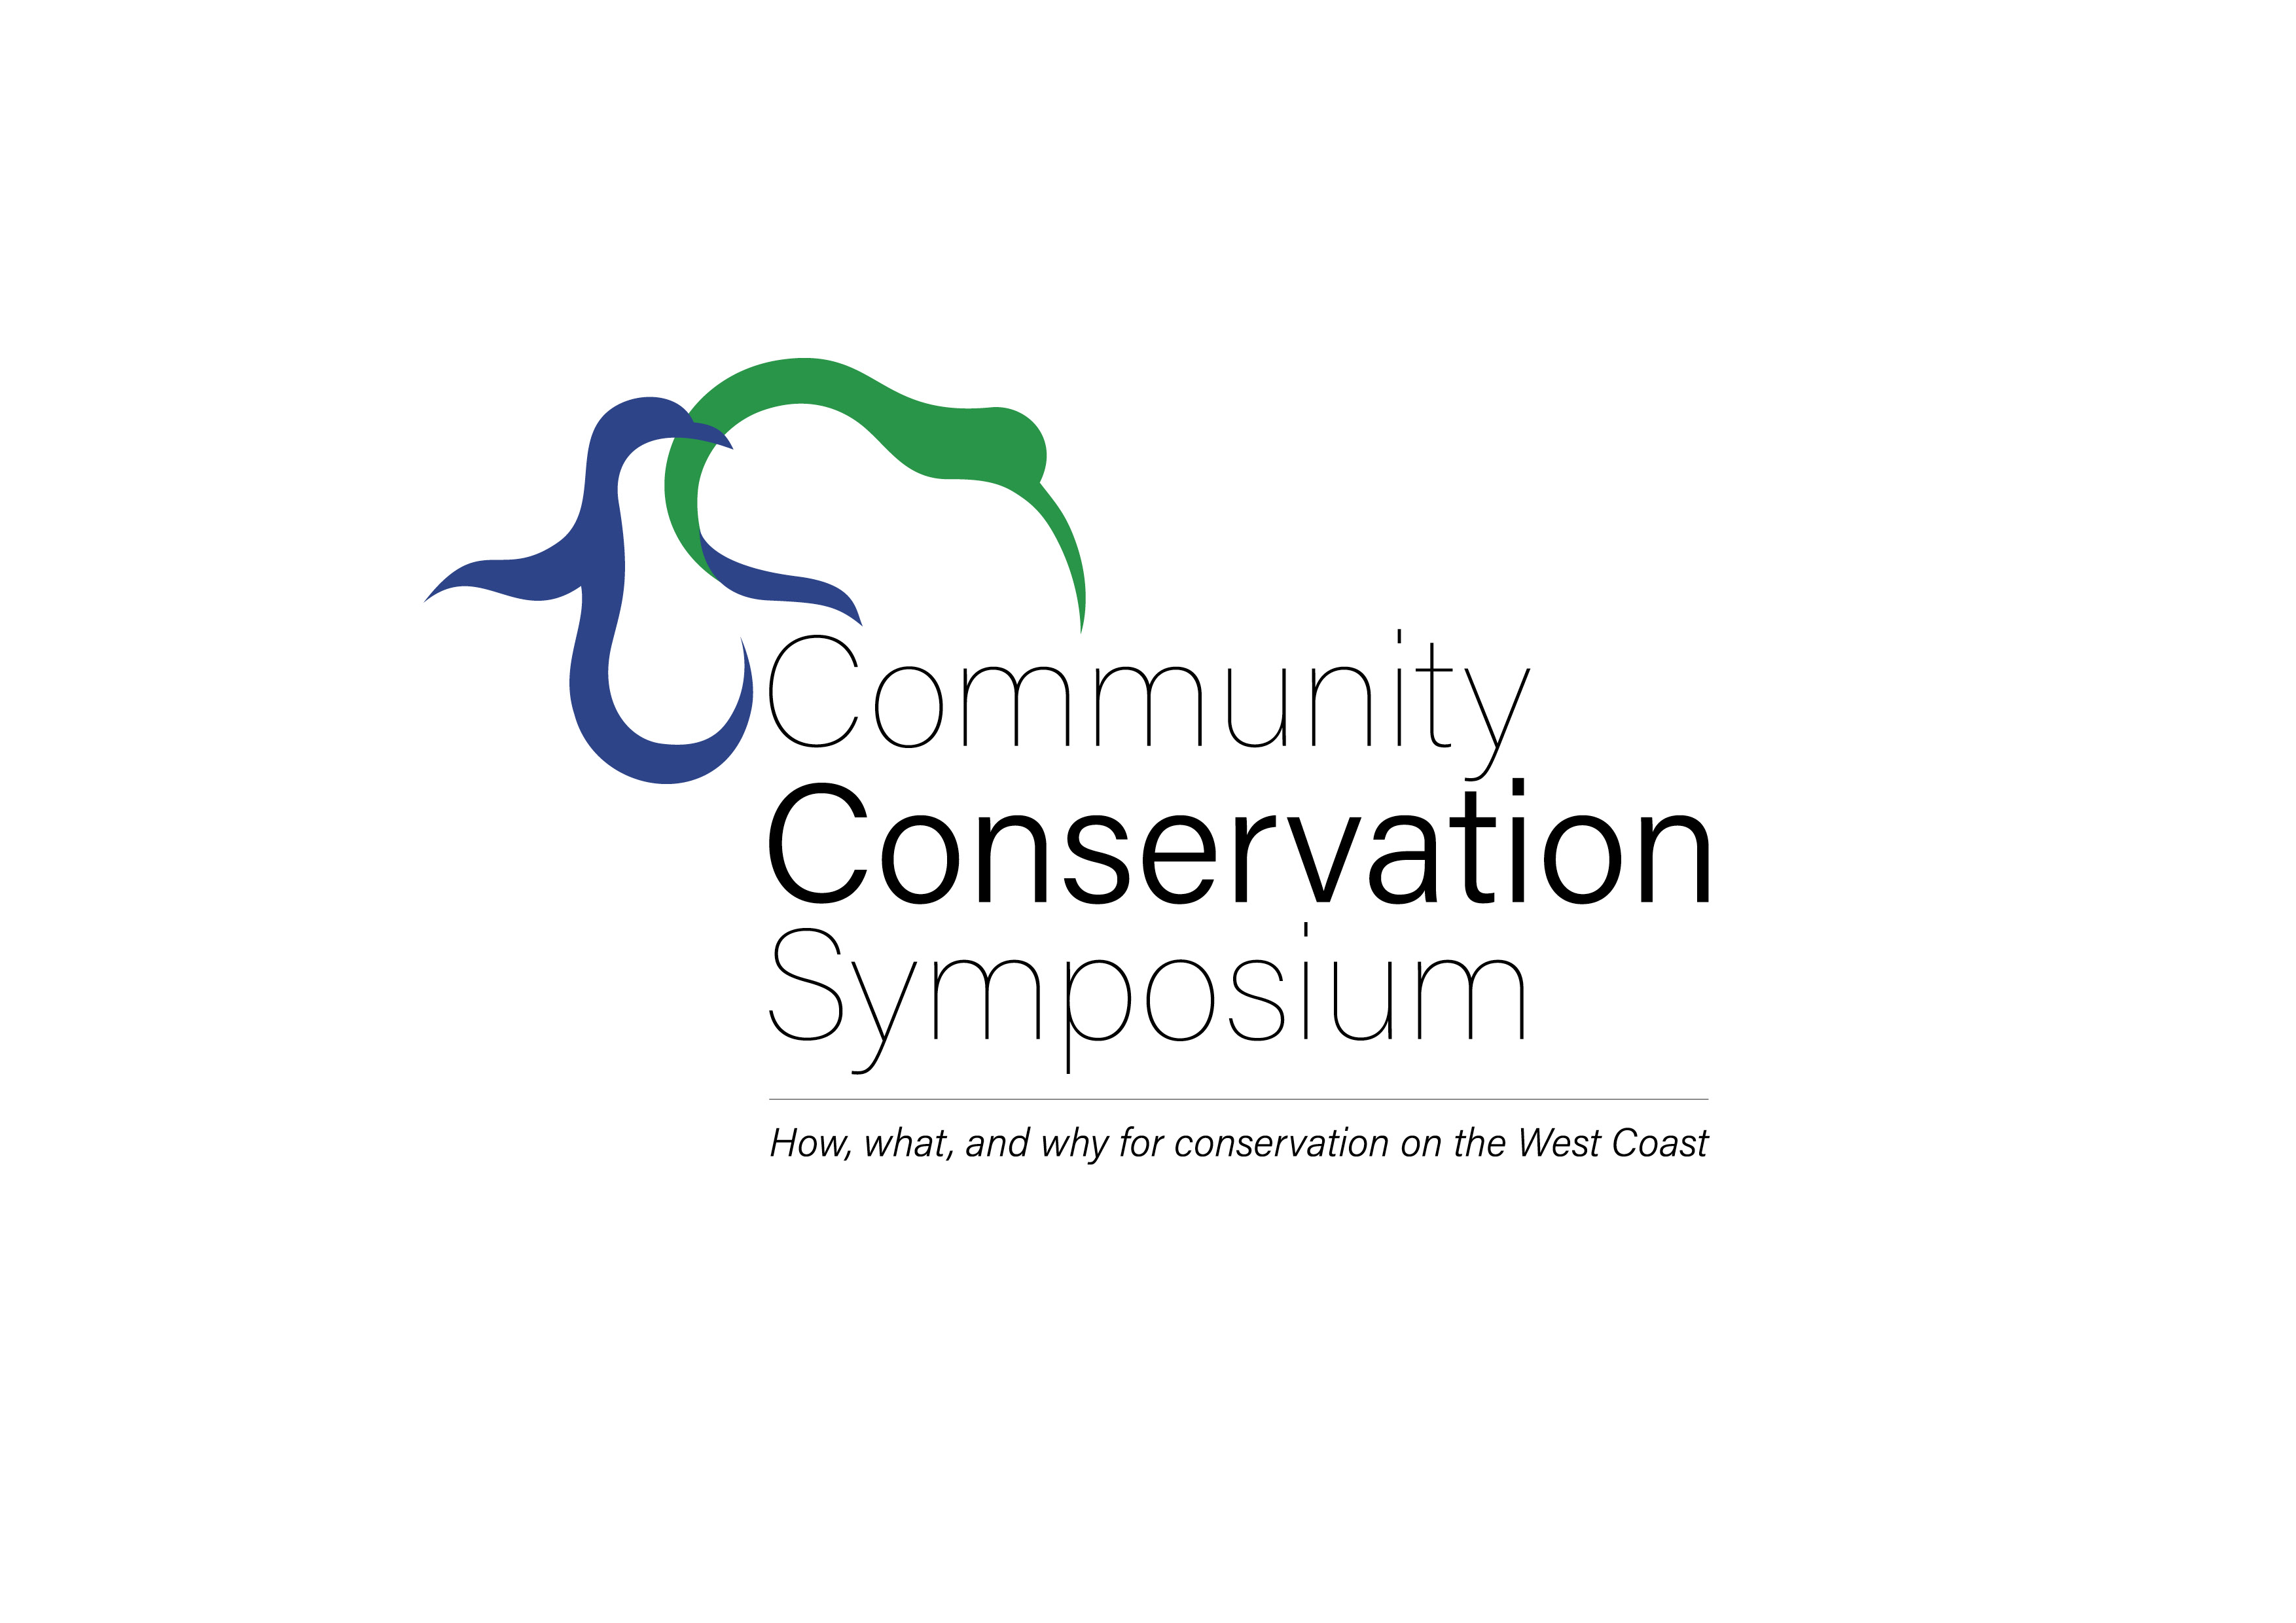 Event planning and management - Community Conservation Symposium - West Coast